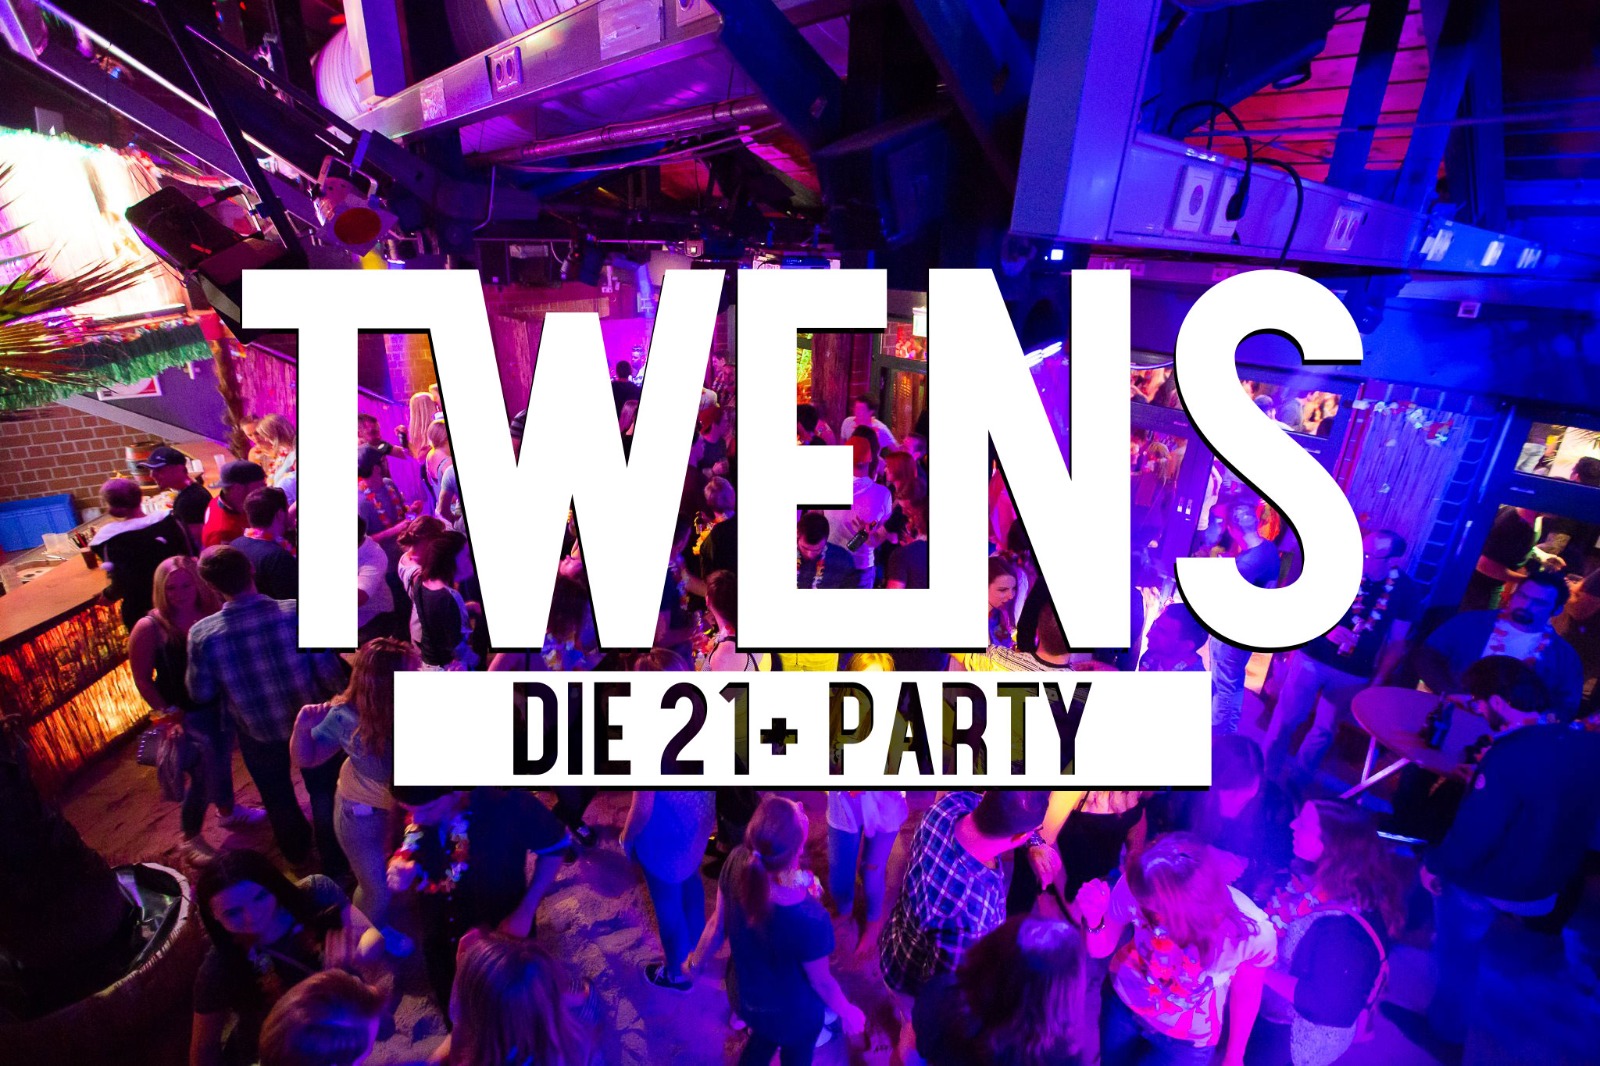 manege-ratingen-lintorf-events-twens-ue21-party